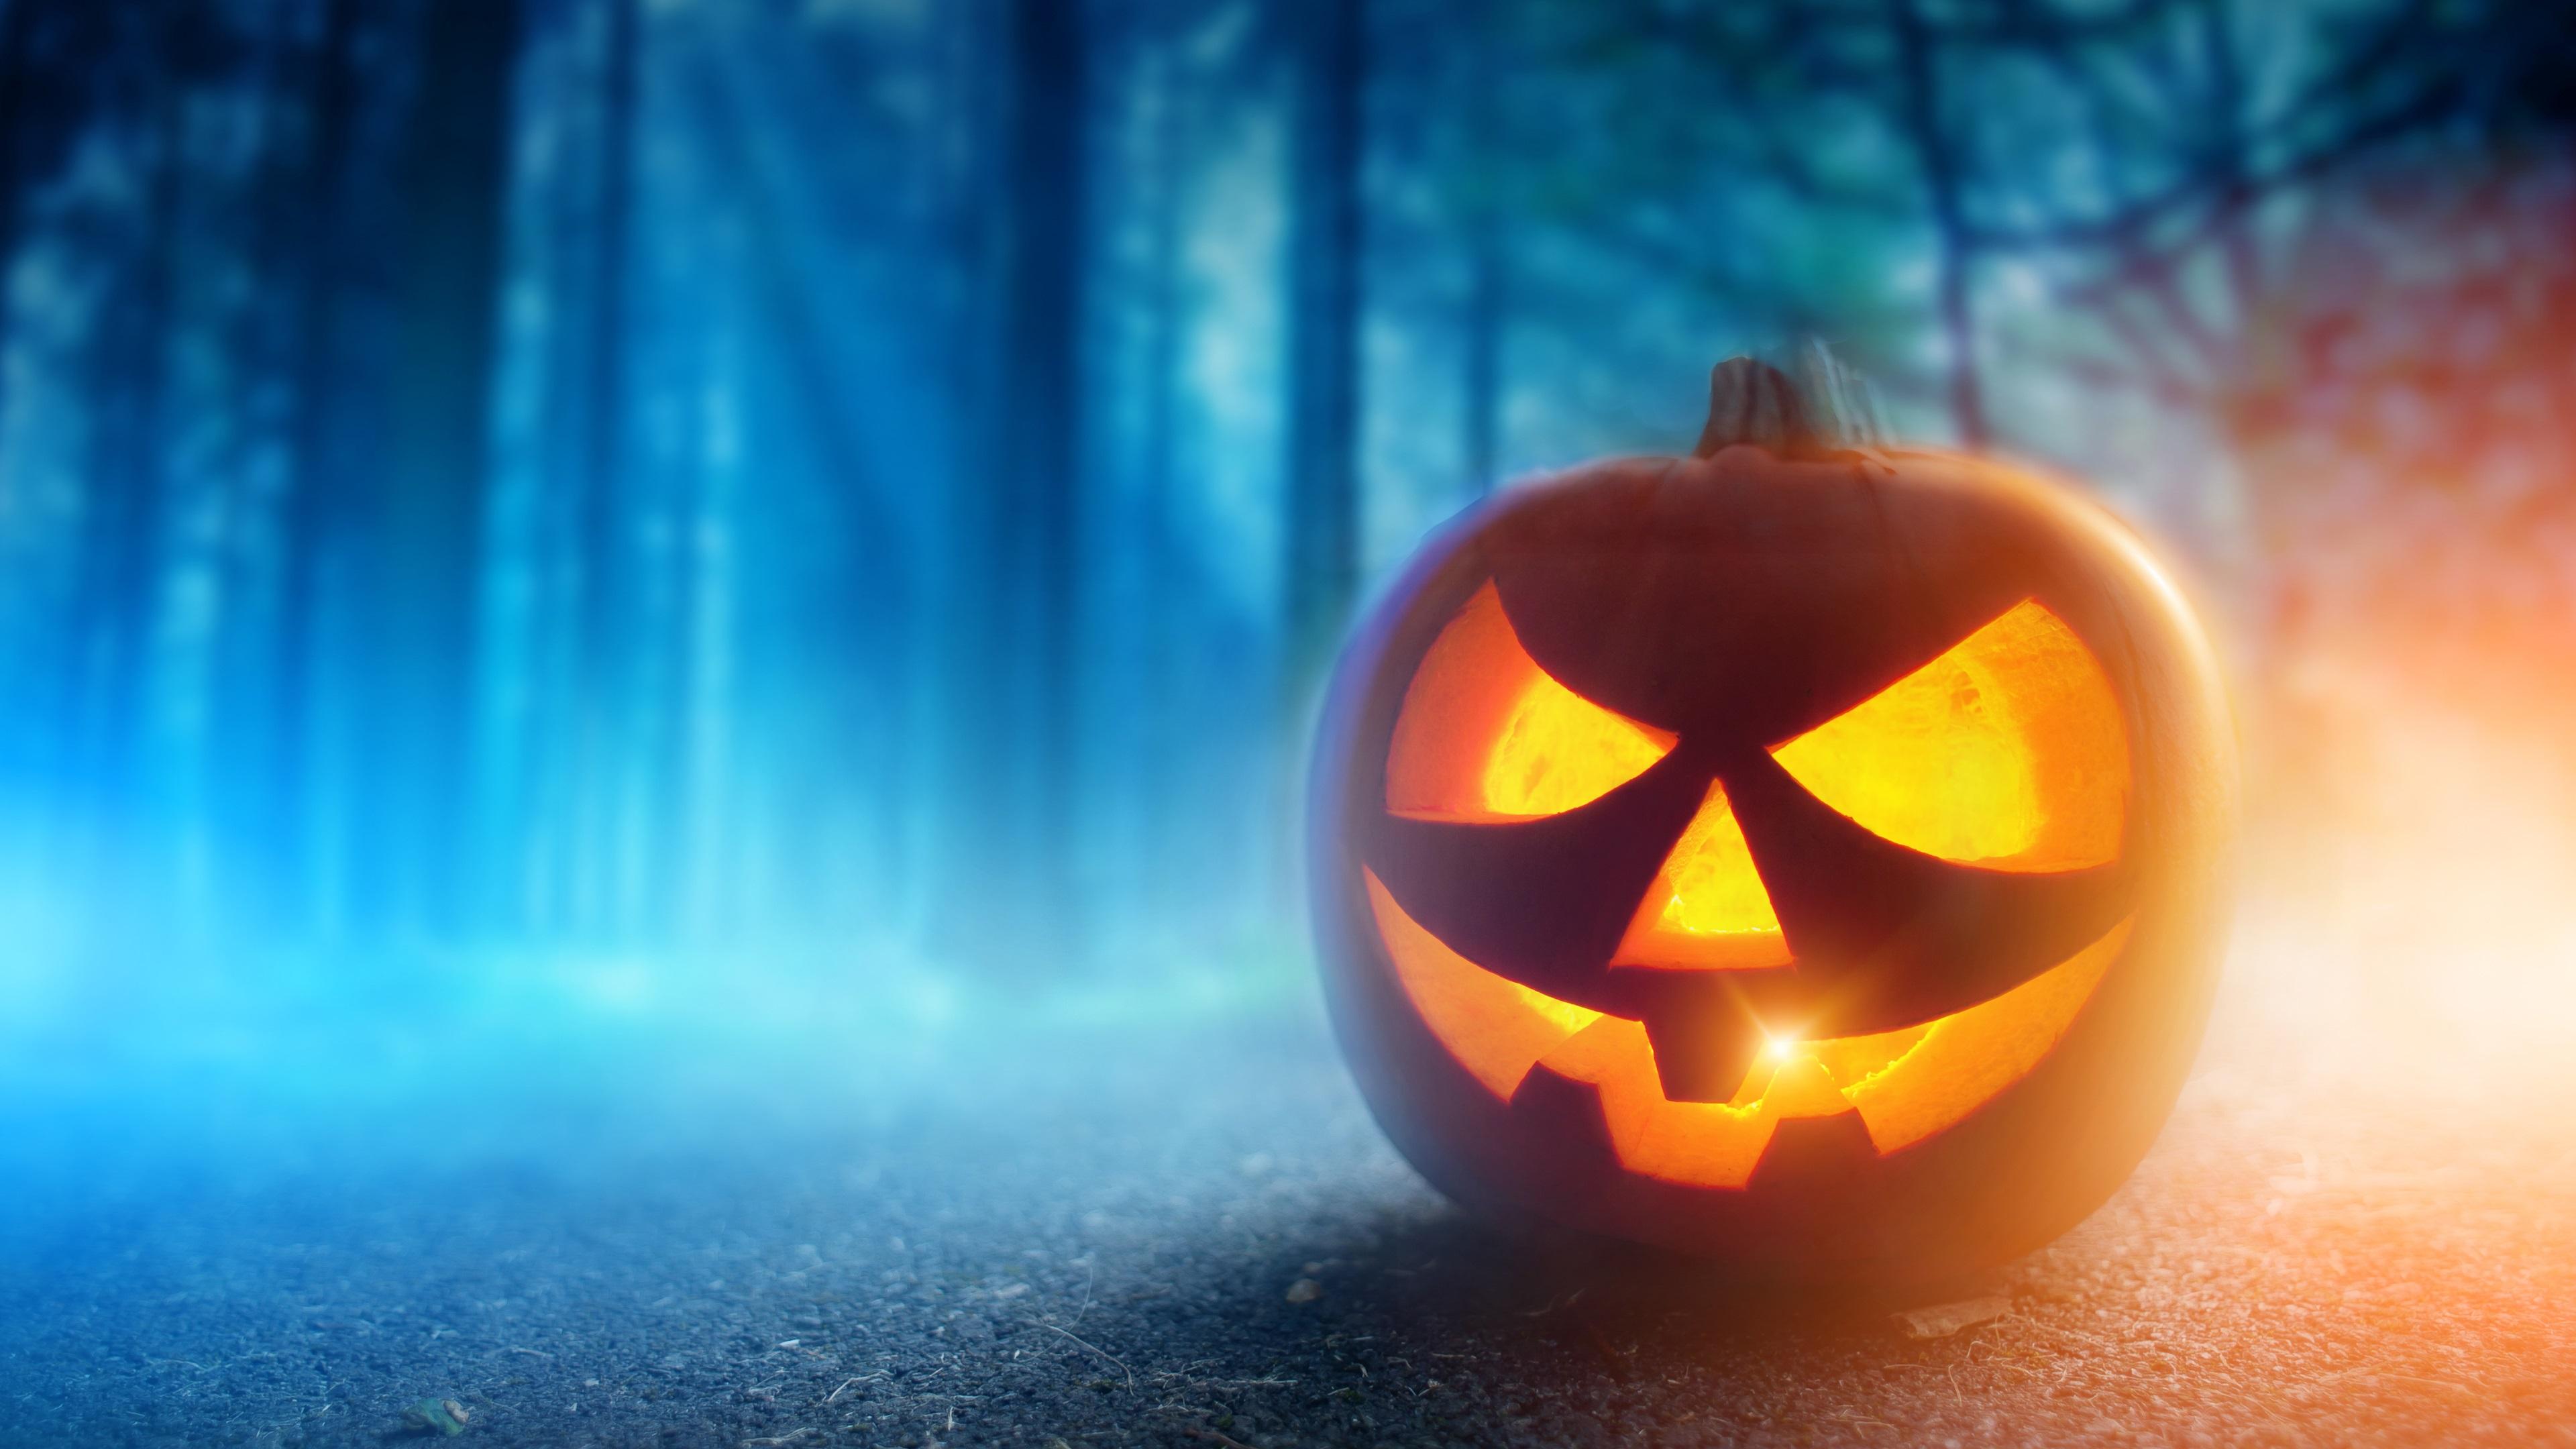 Wallpaper Halloween, pumpkin lantern, face, night, trees 3840x2160 UHD 4K Picture, Image